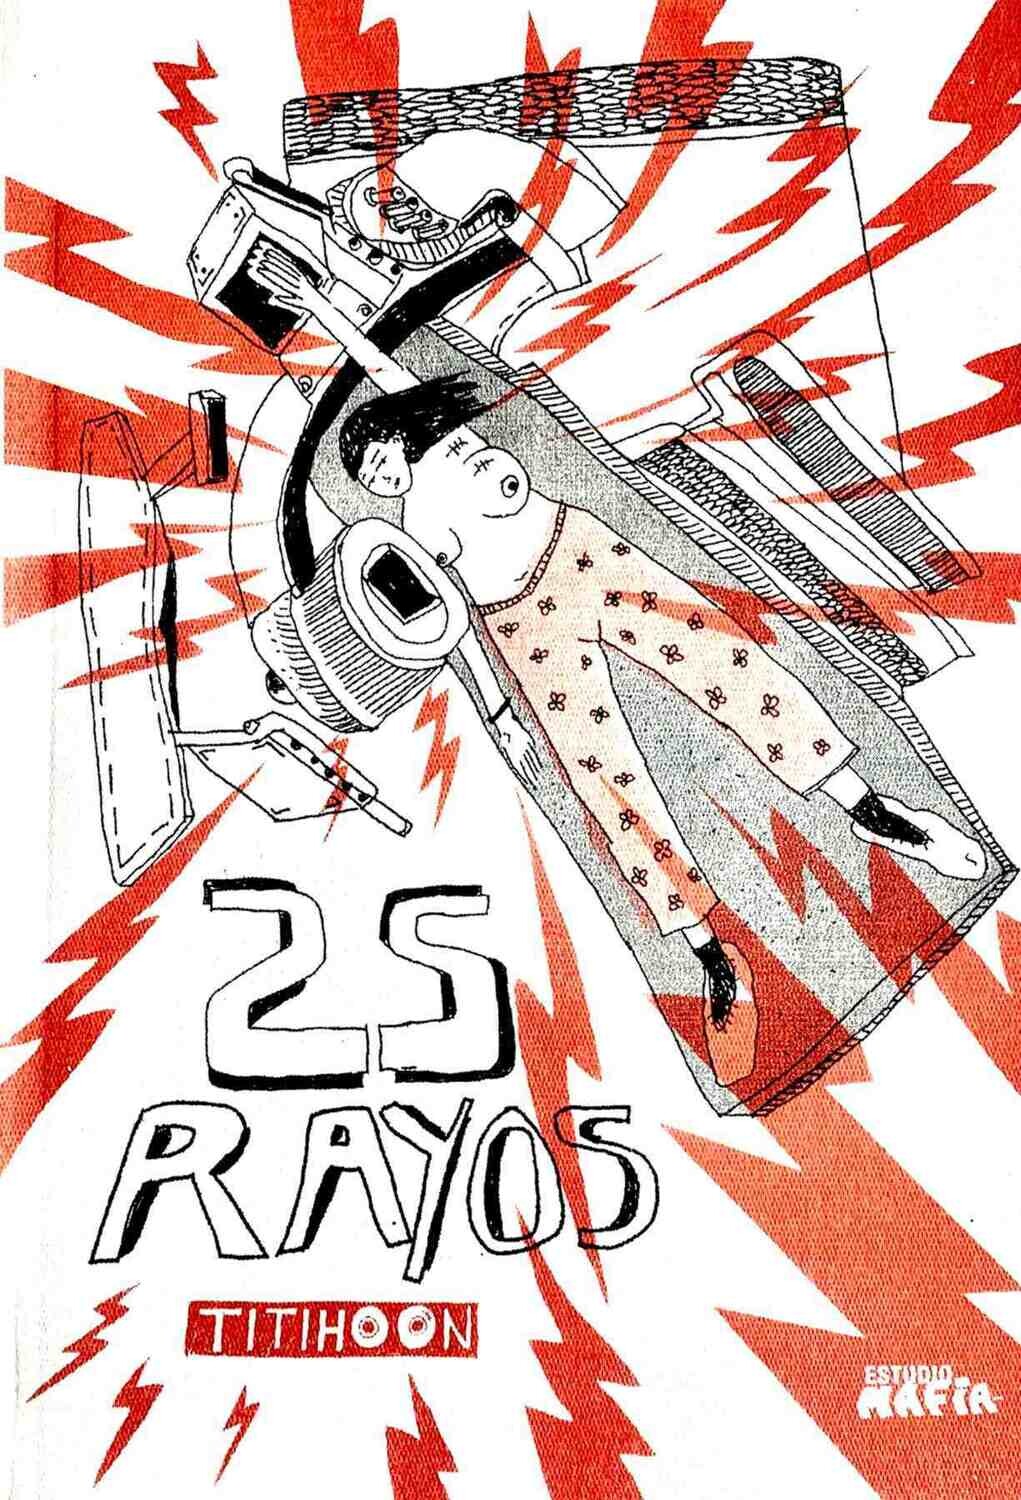 25 Rayos by Titihoon - Graphic Novel in Spanish